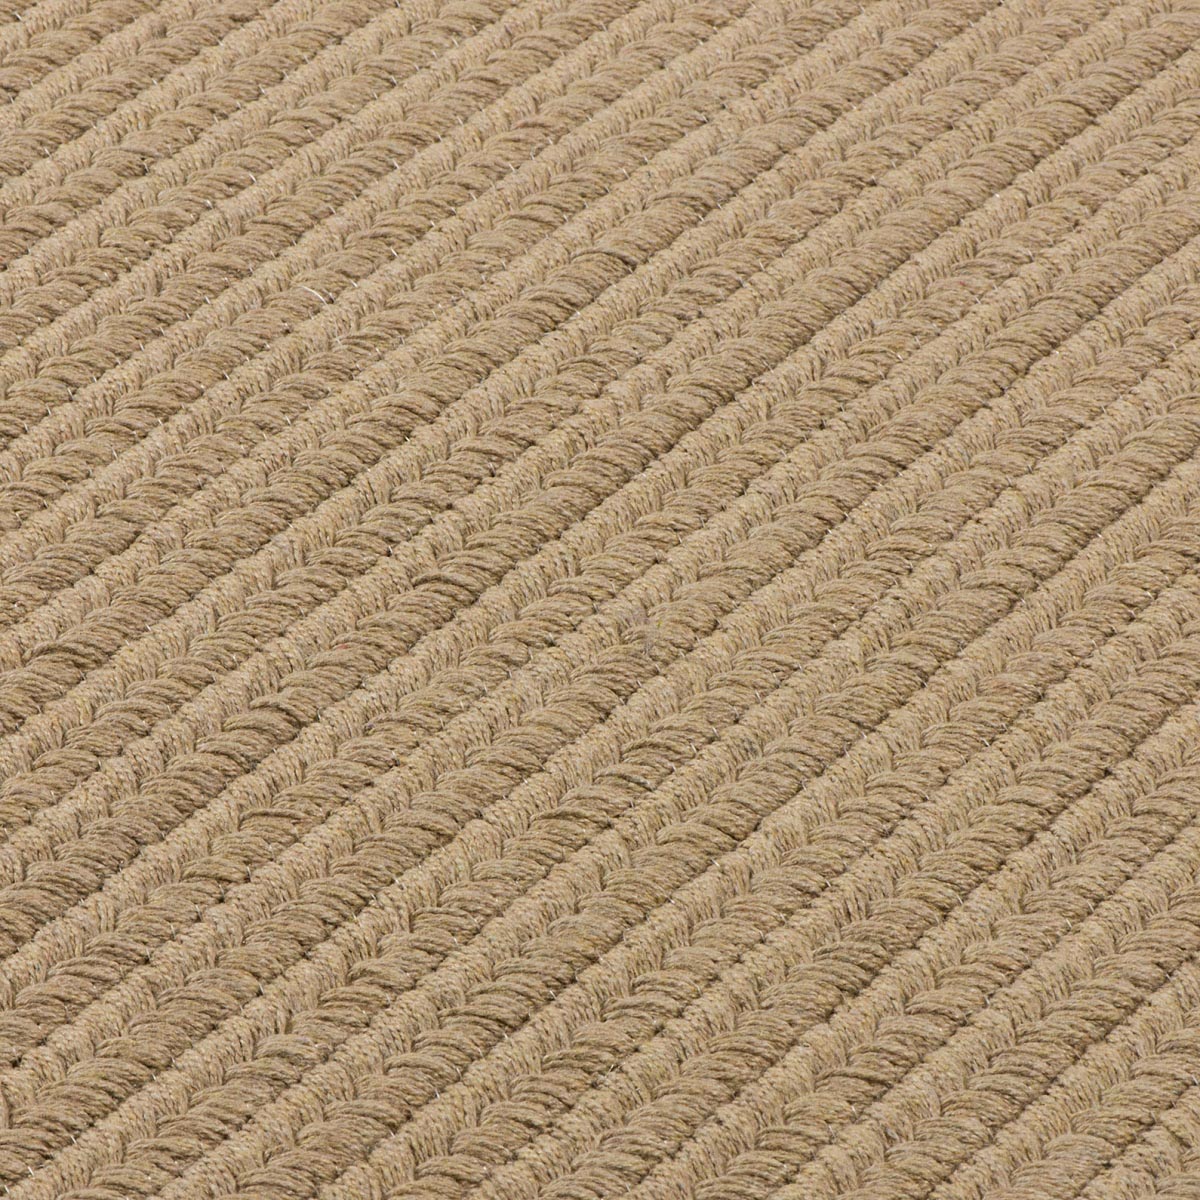 Sunbrella Solid Wheat Outdoor Braided Rectangular Rugs